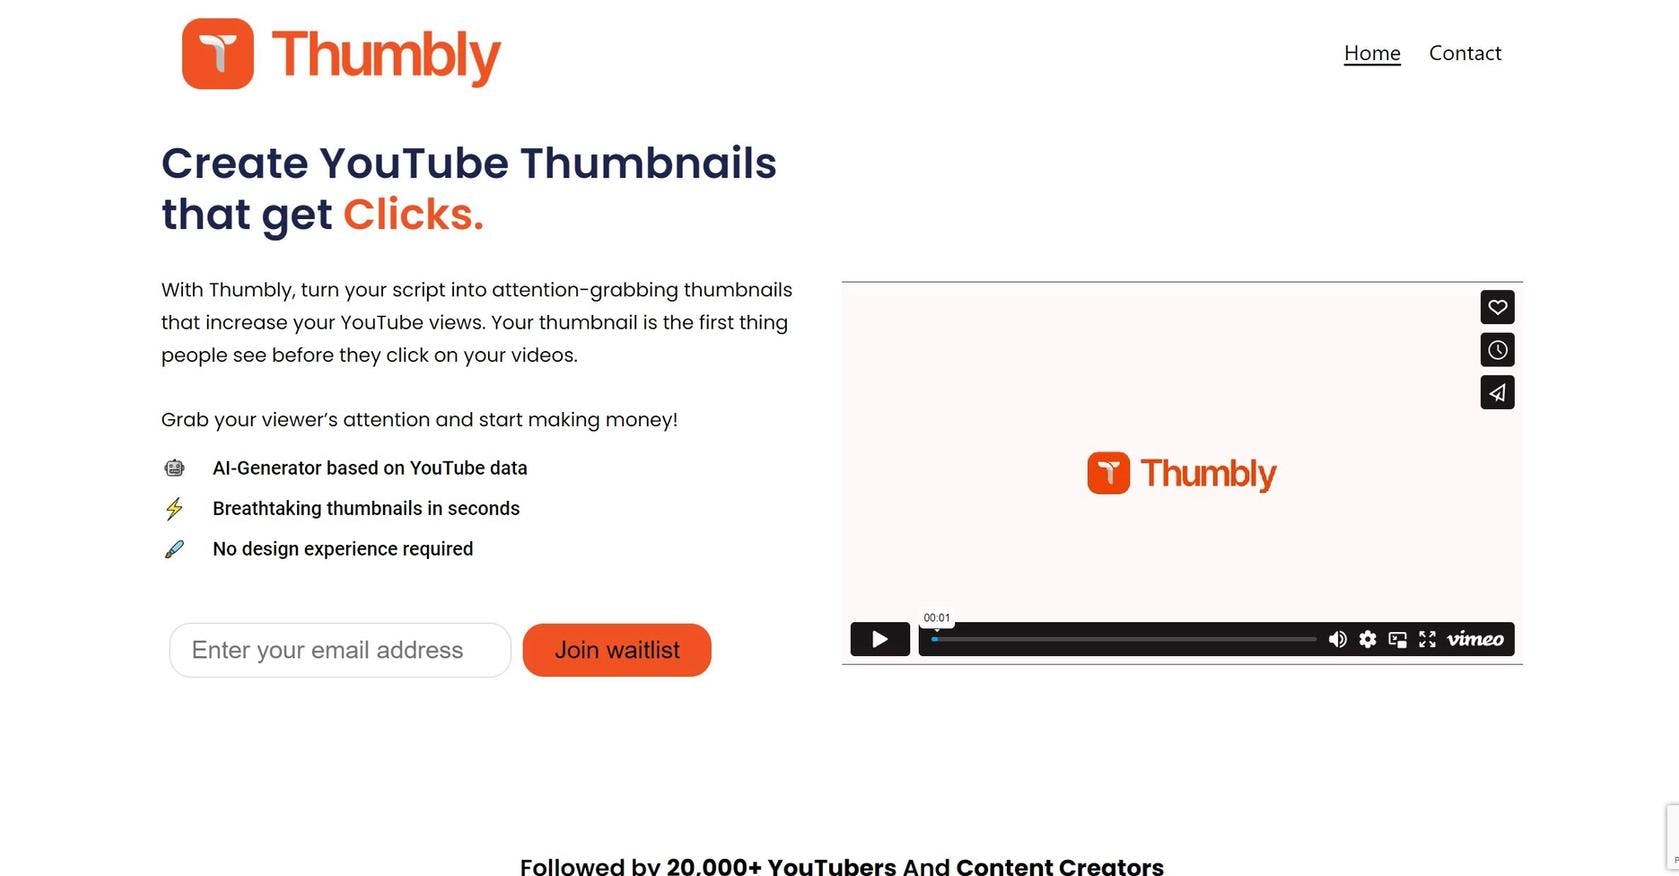 ThemotherAI - Thumbly